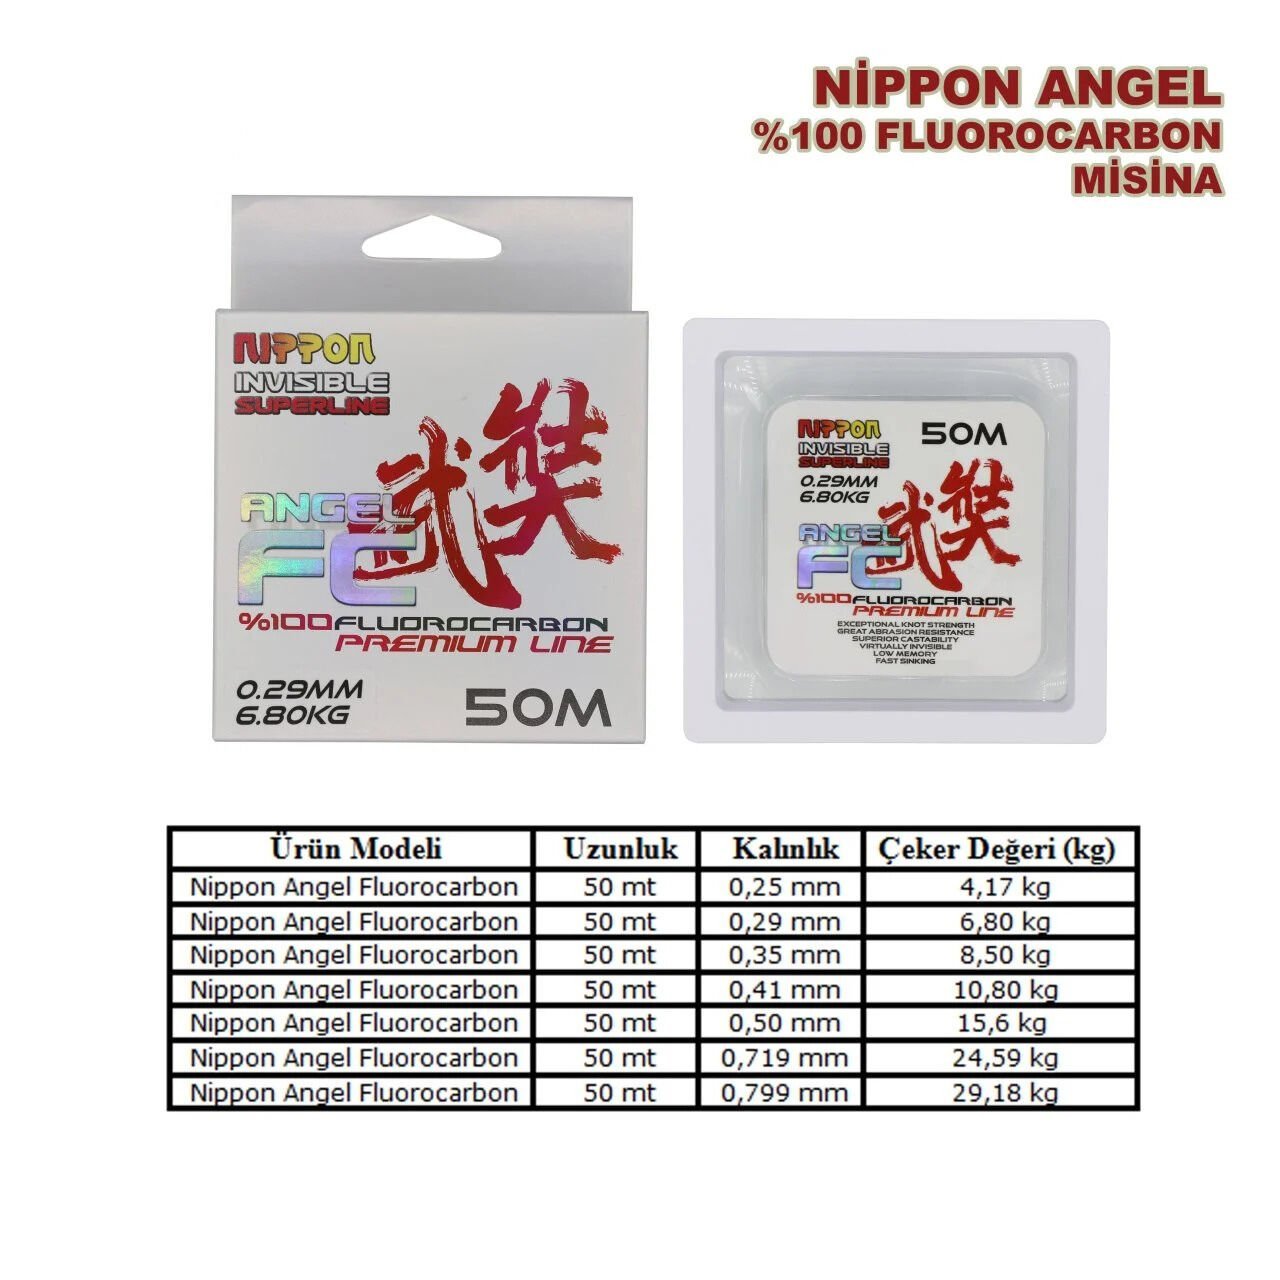 Nippon Angel FluoroCarbon Misina 50 mt 0,410 mm